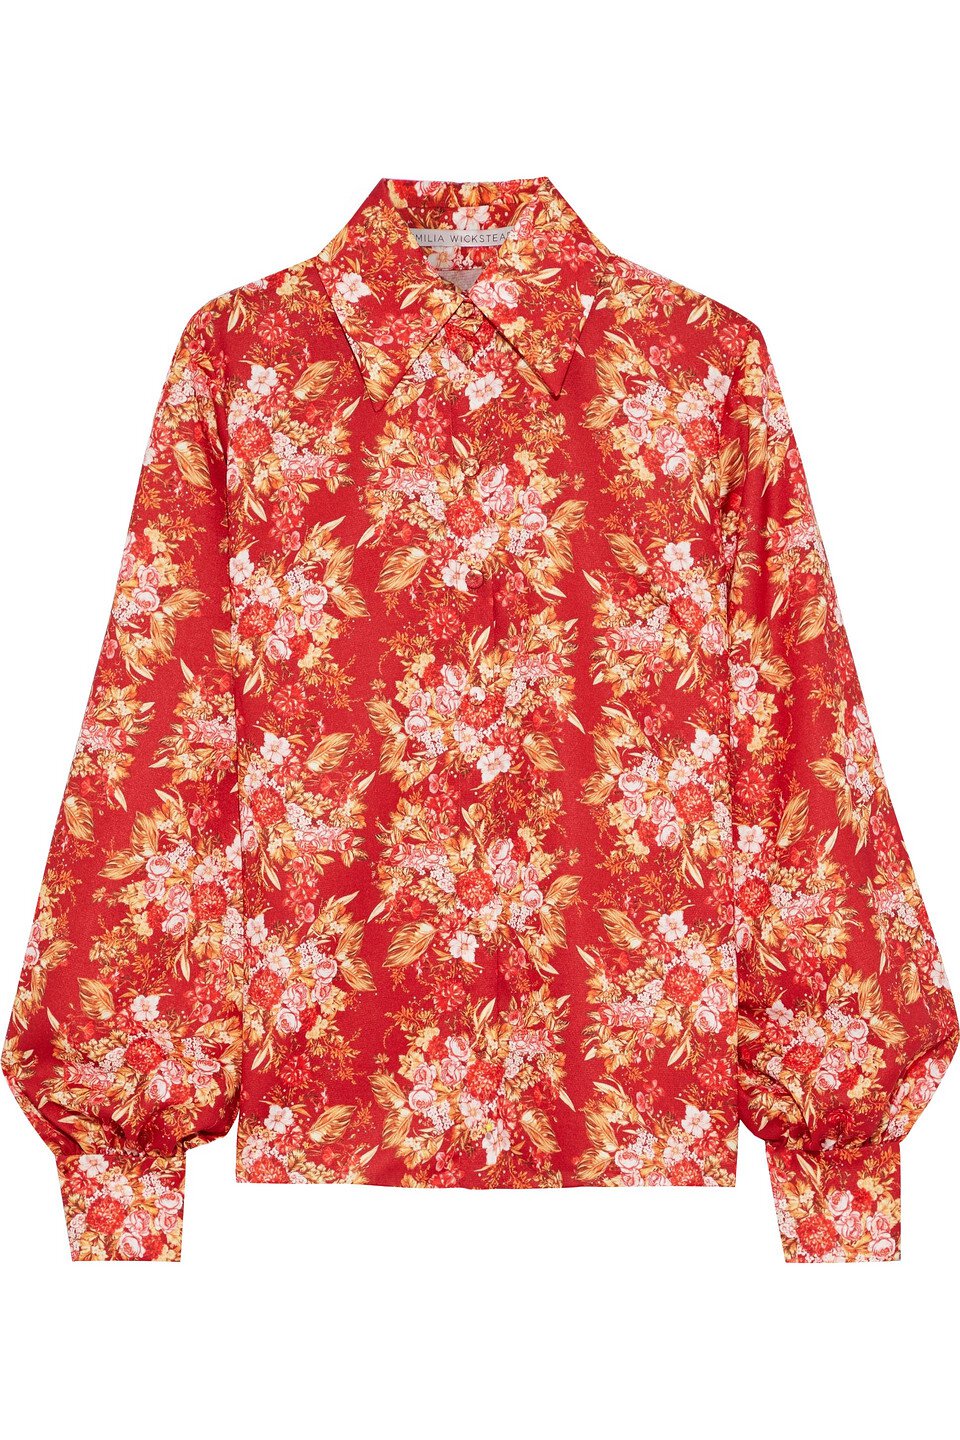 Emilia Wickstead Petula Satin-Crepe Floral Printed Shirt